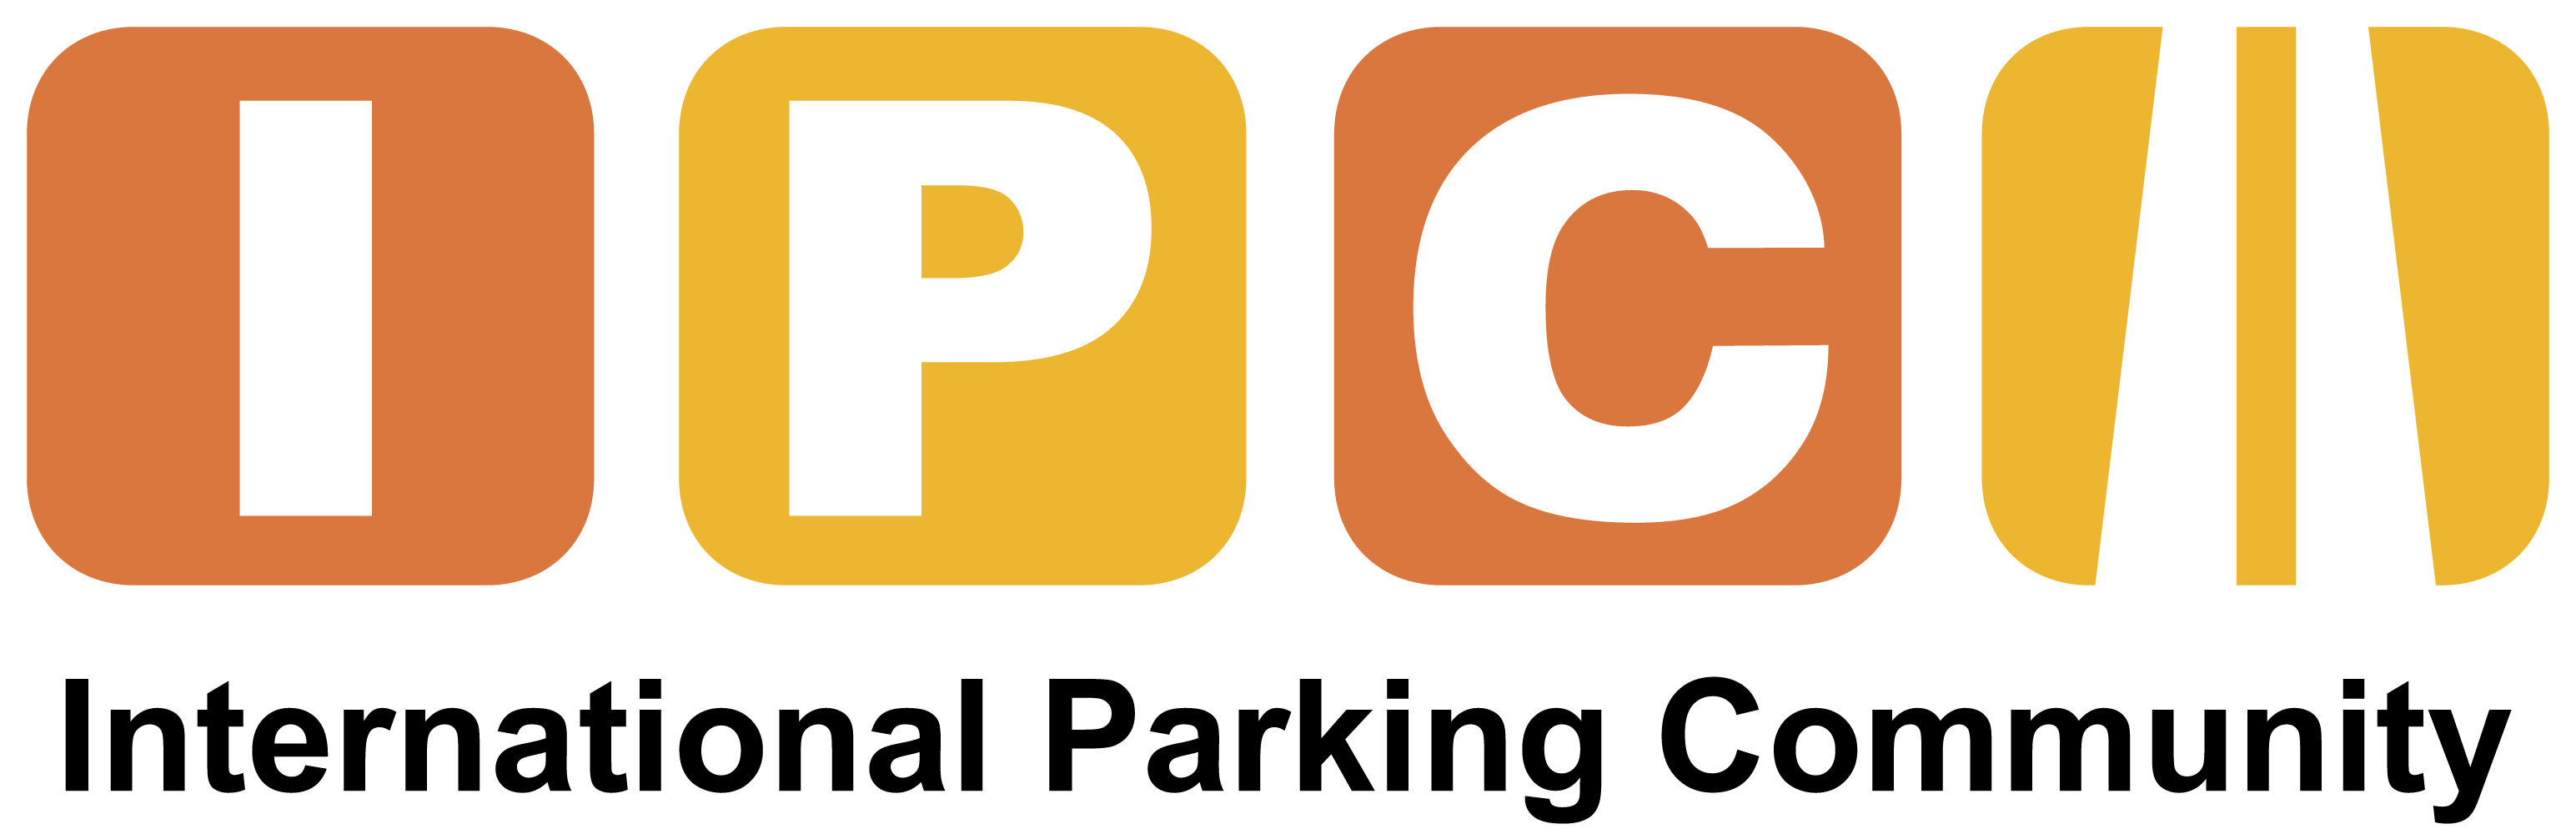 ipc-logo